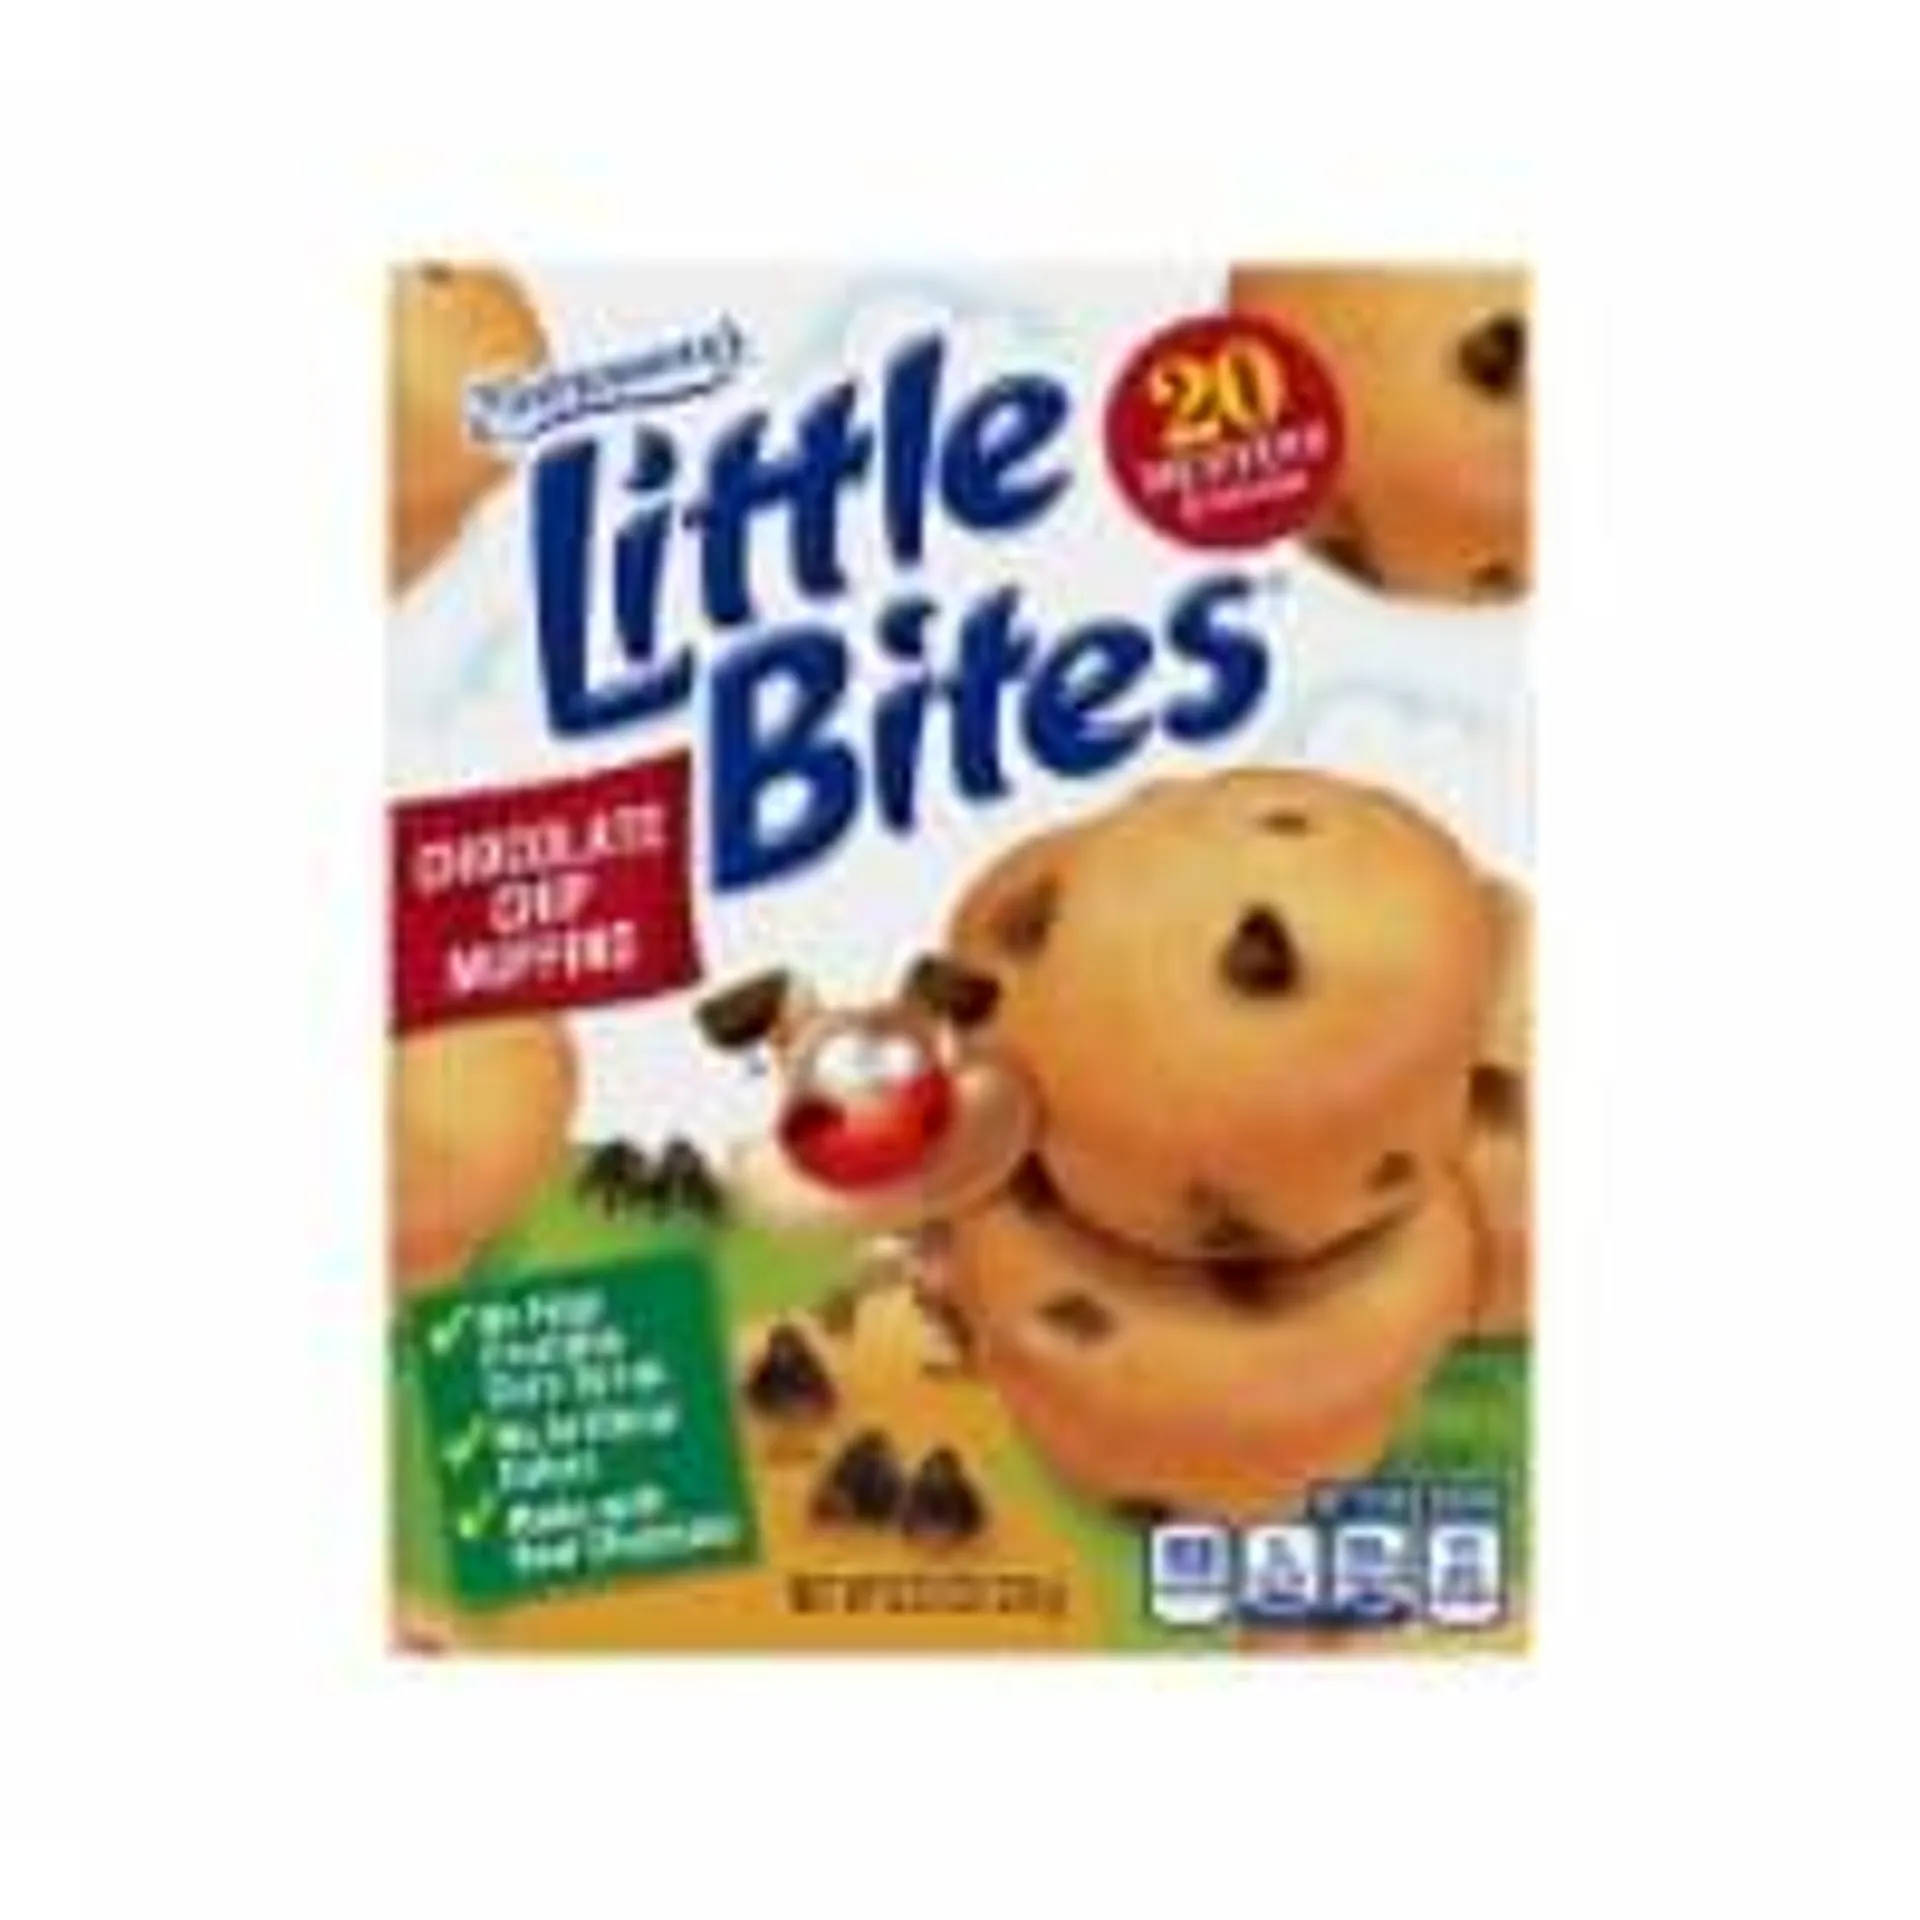 Entenmann's Little Bites Chocolate Chip Mini Muffins Pouches